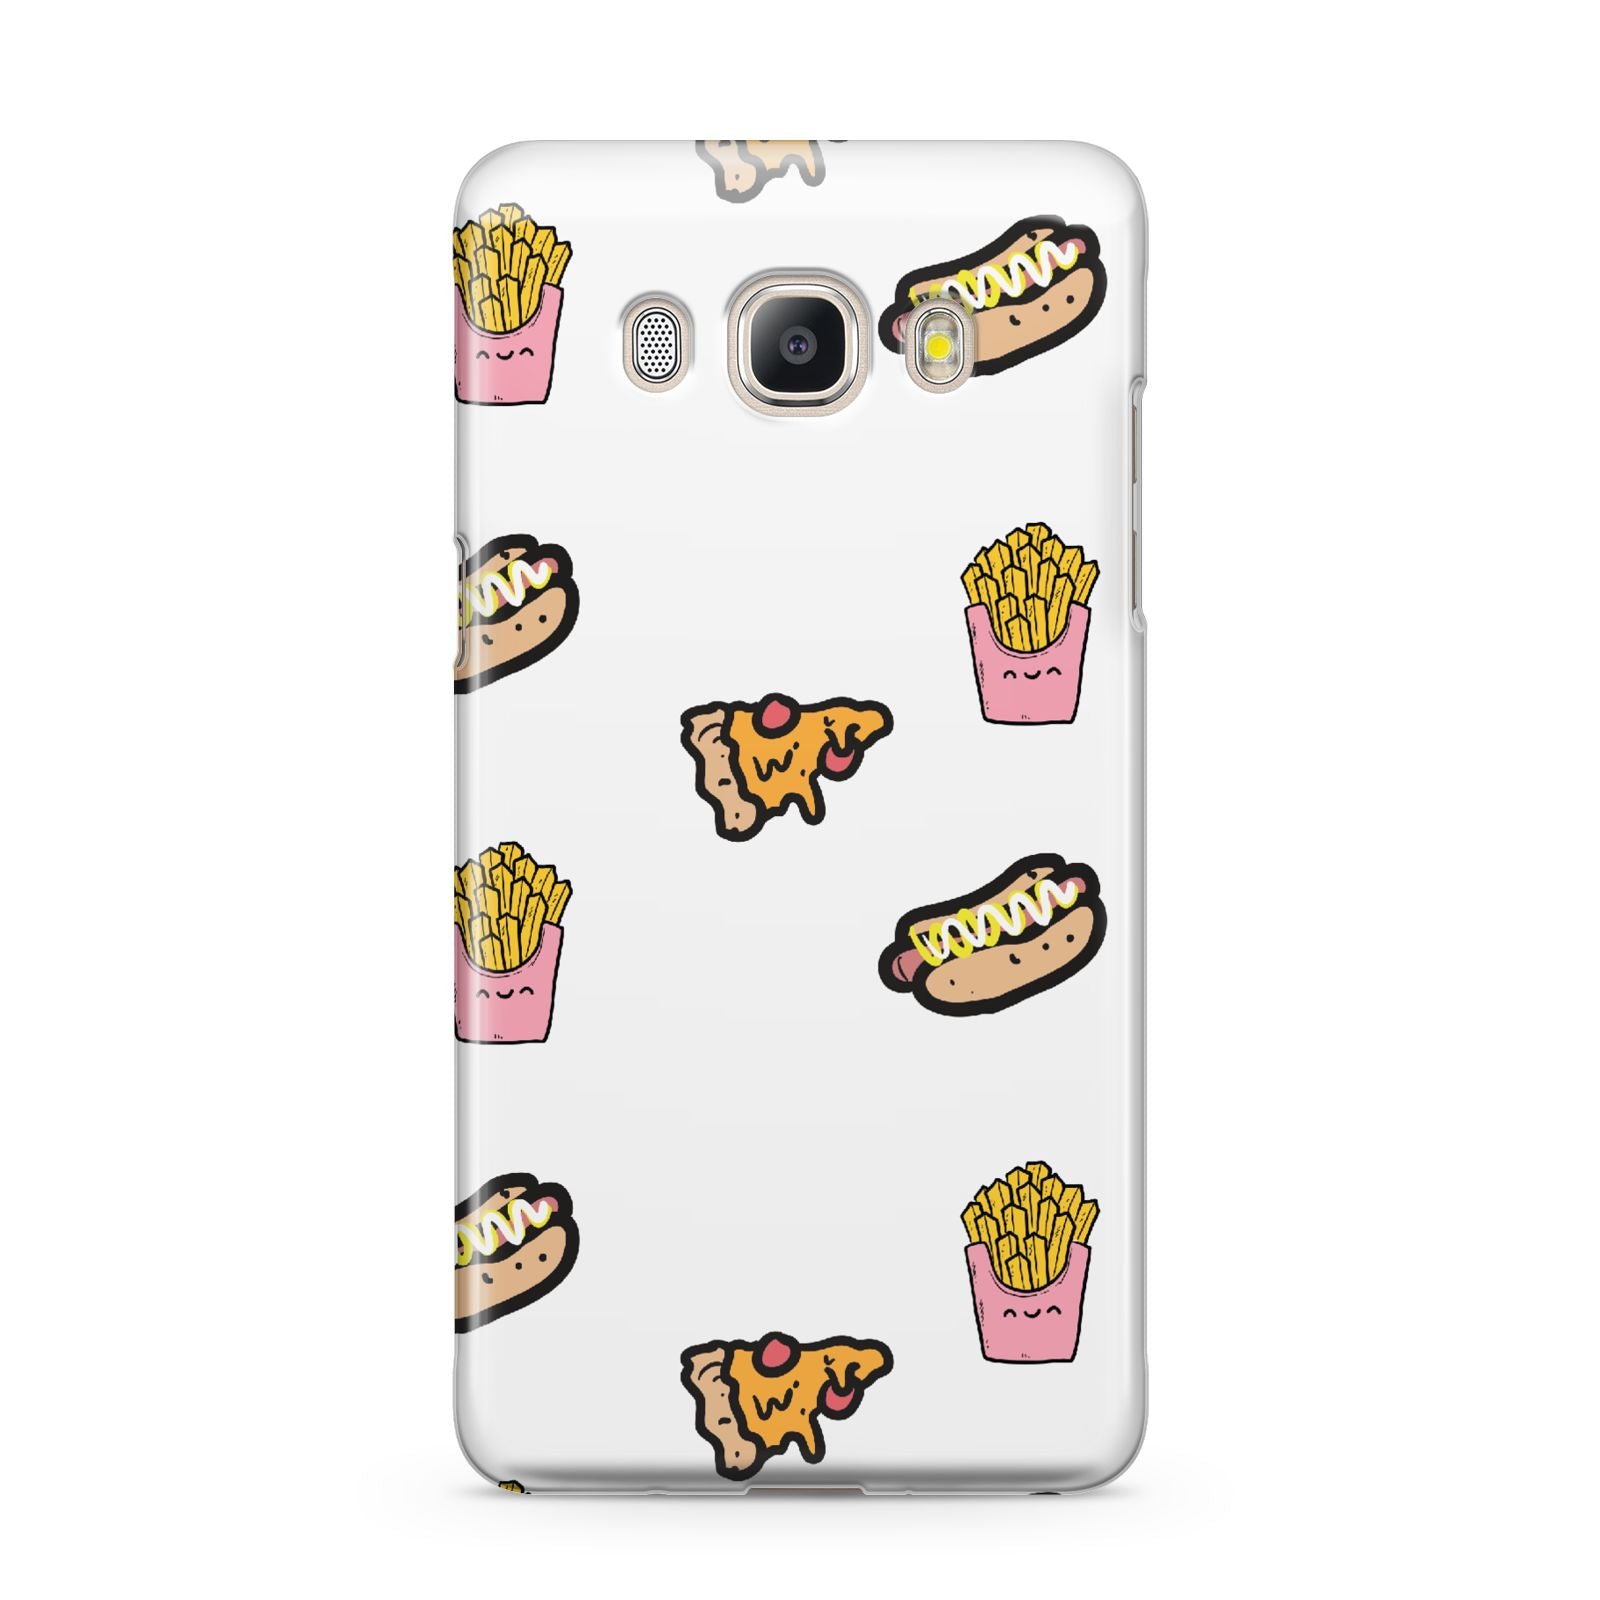 Fries Pizza Hot Dog Samsung Galaxy J5 2016 Case